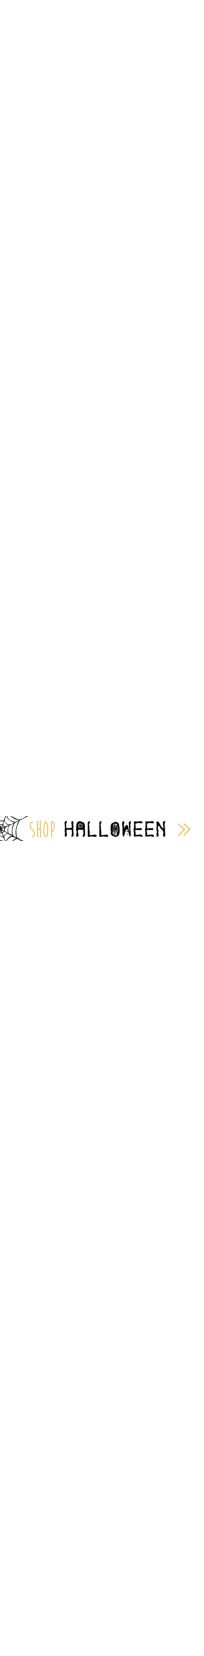 shop-halloween